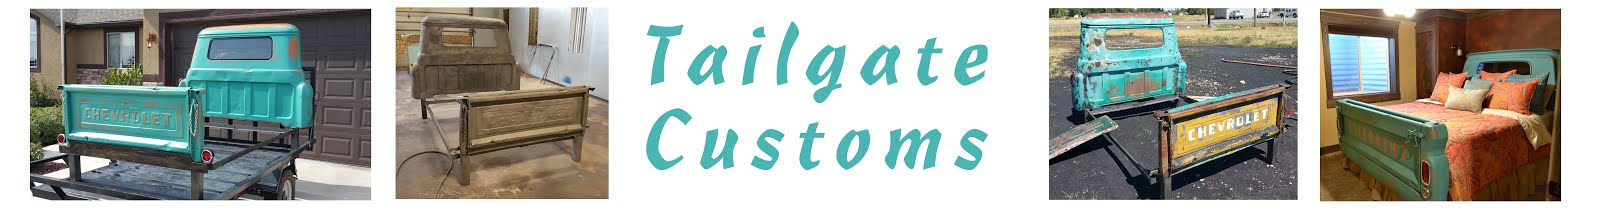 Tailgate Customs